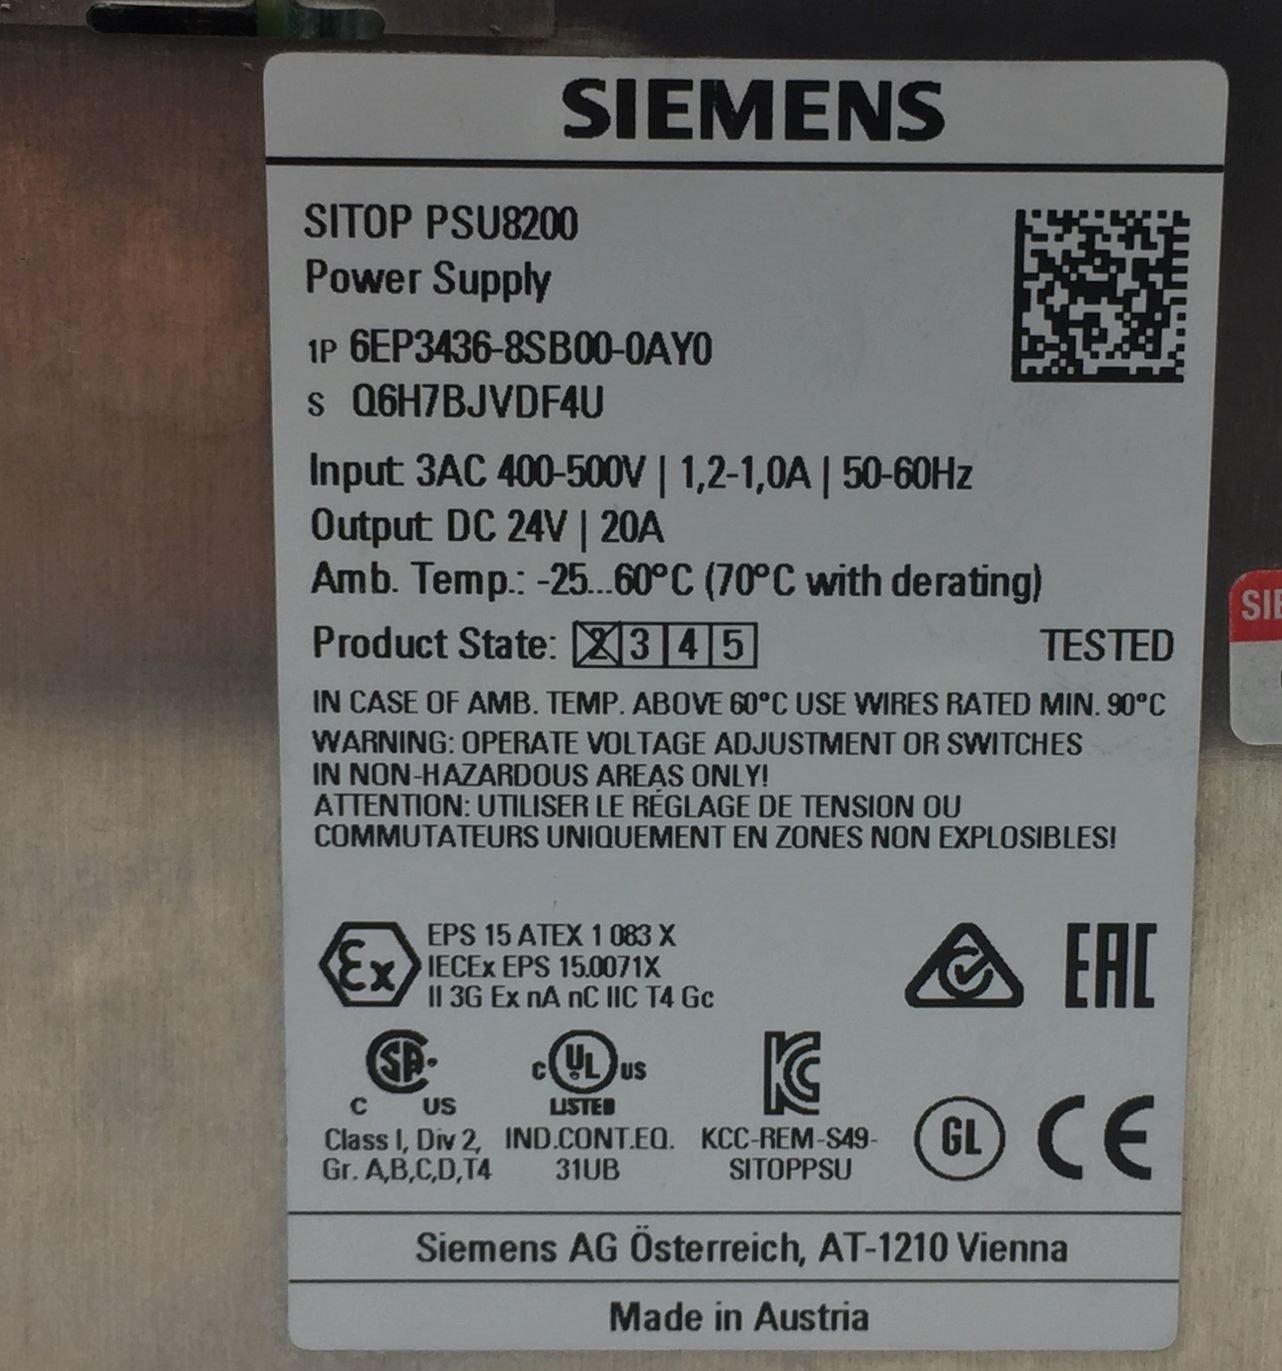  SIEMENS 6EP3436-8SB00-0AY0 SITOP PSU8200 POWER SUPPLY 24VDC TESTED 